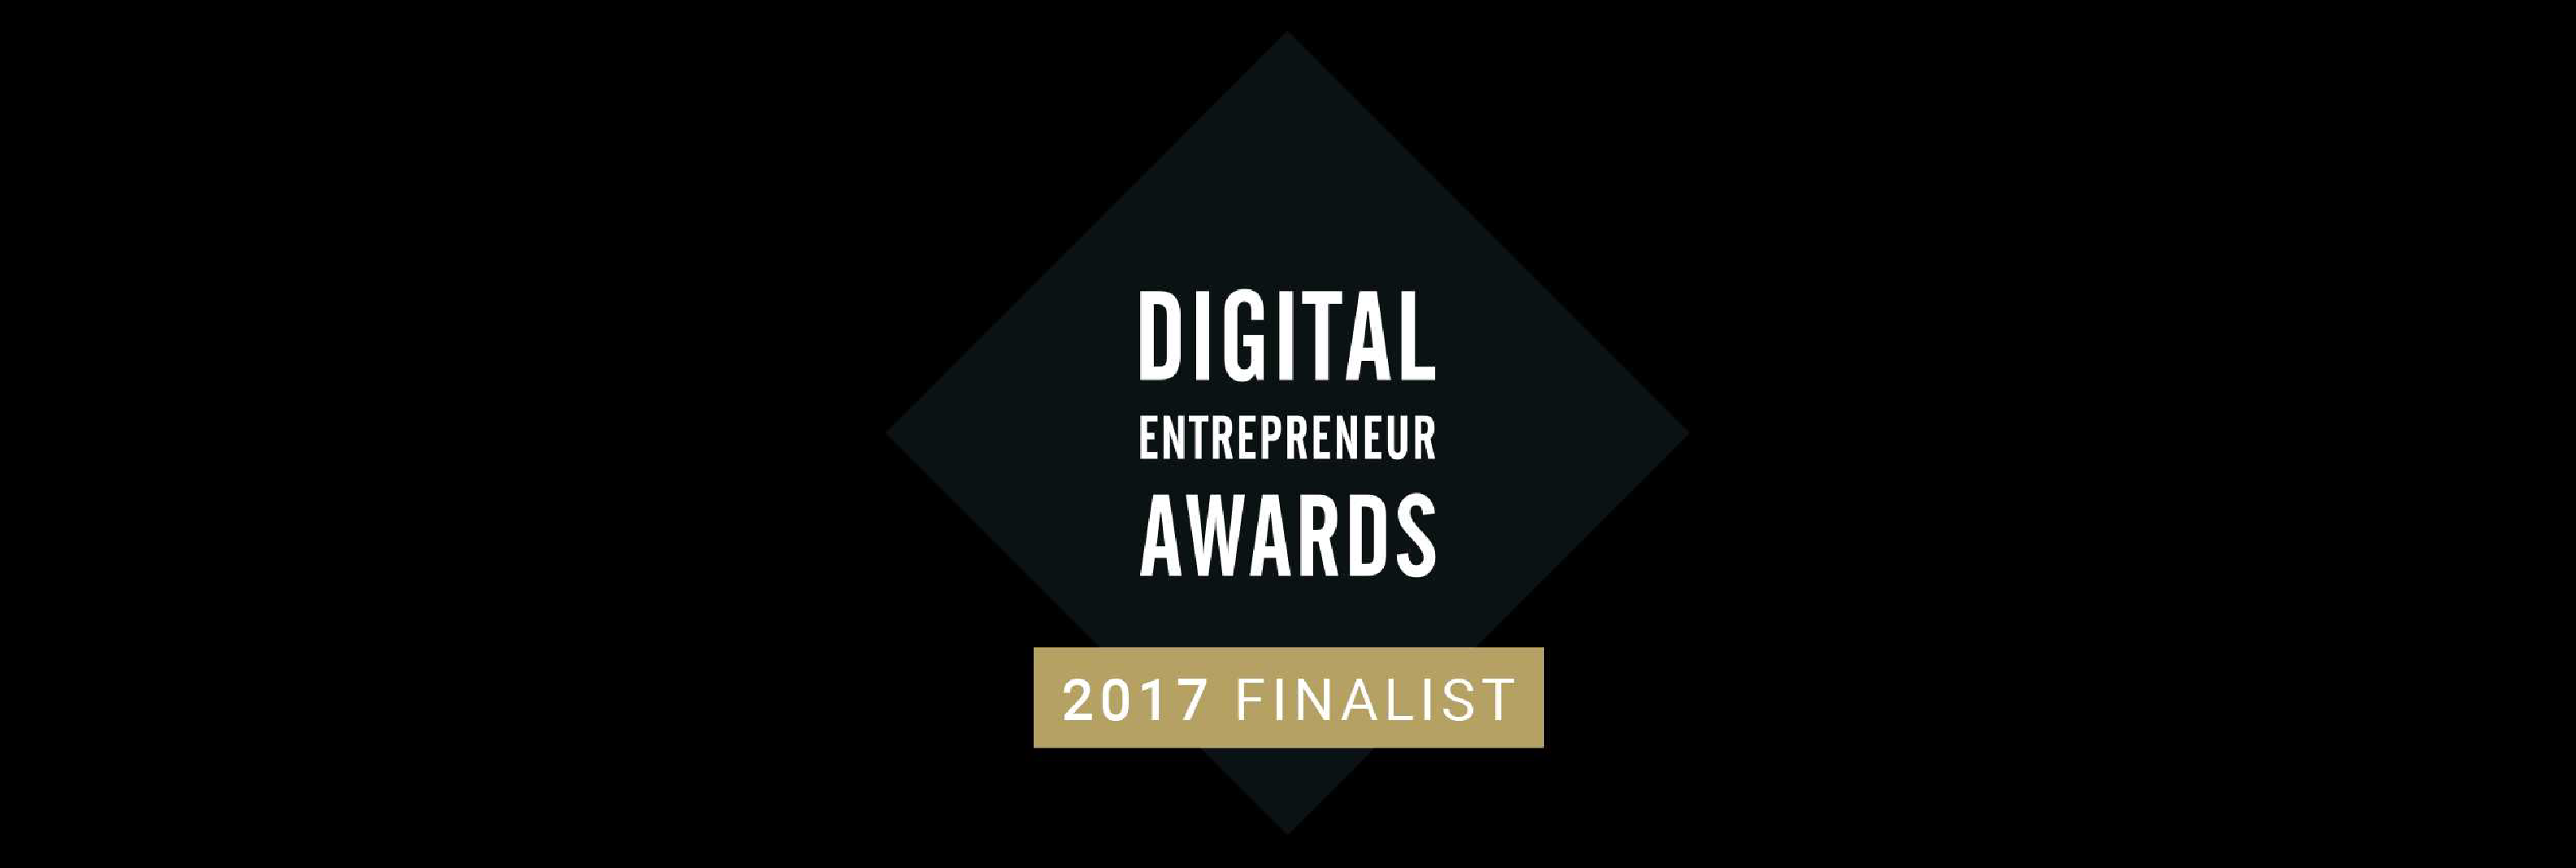 The Digital Entrepreneur Awards: 2017 Finalist text image